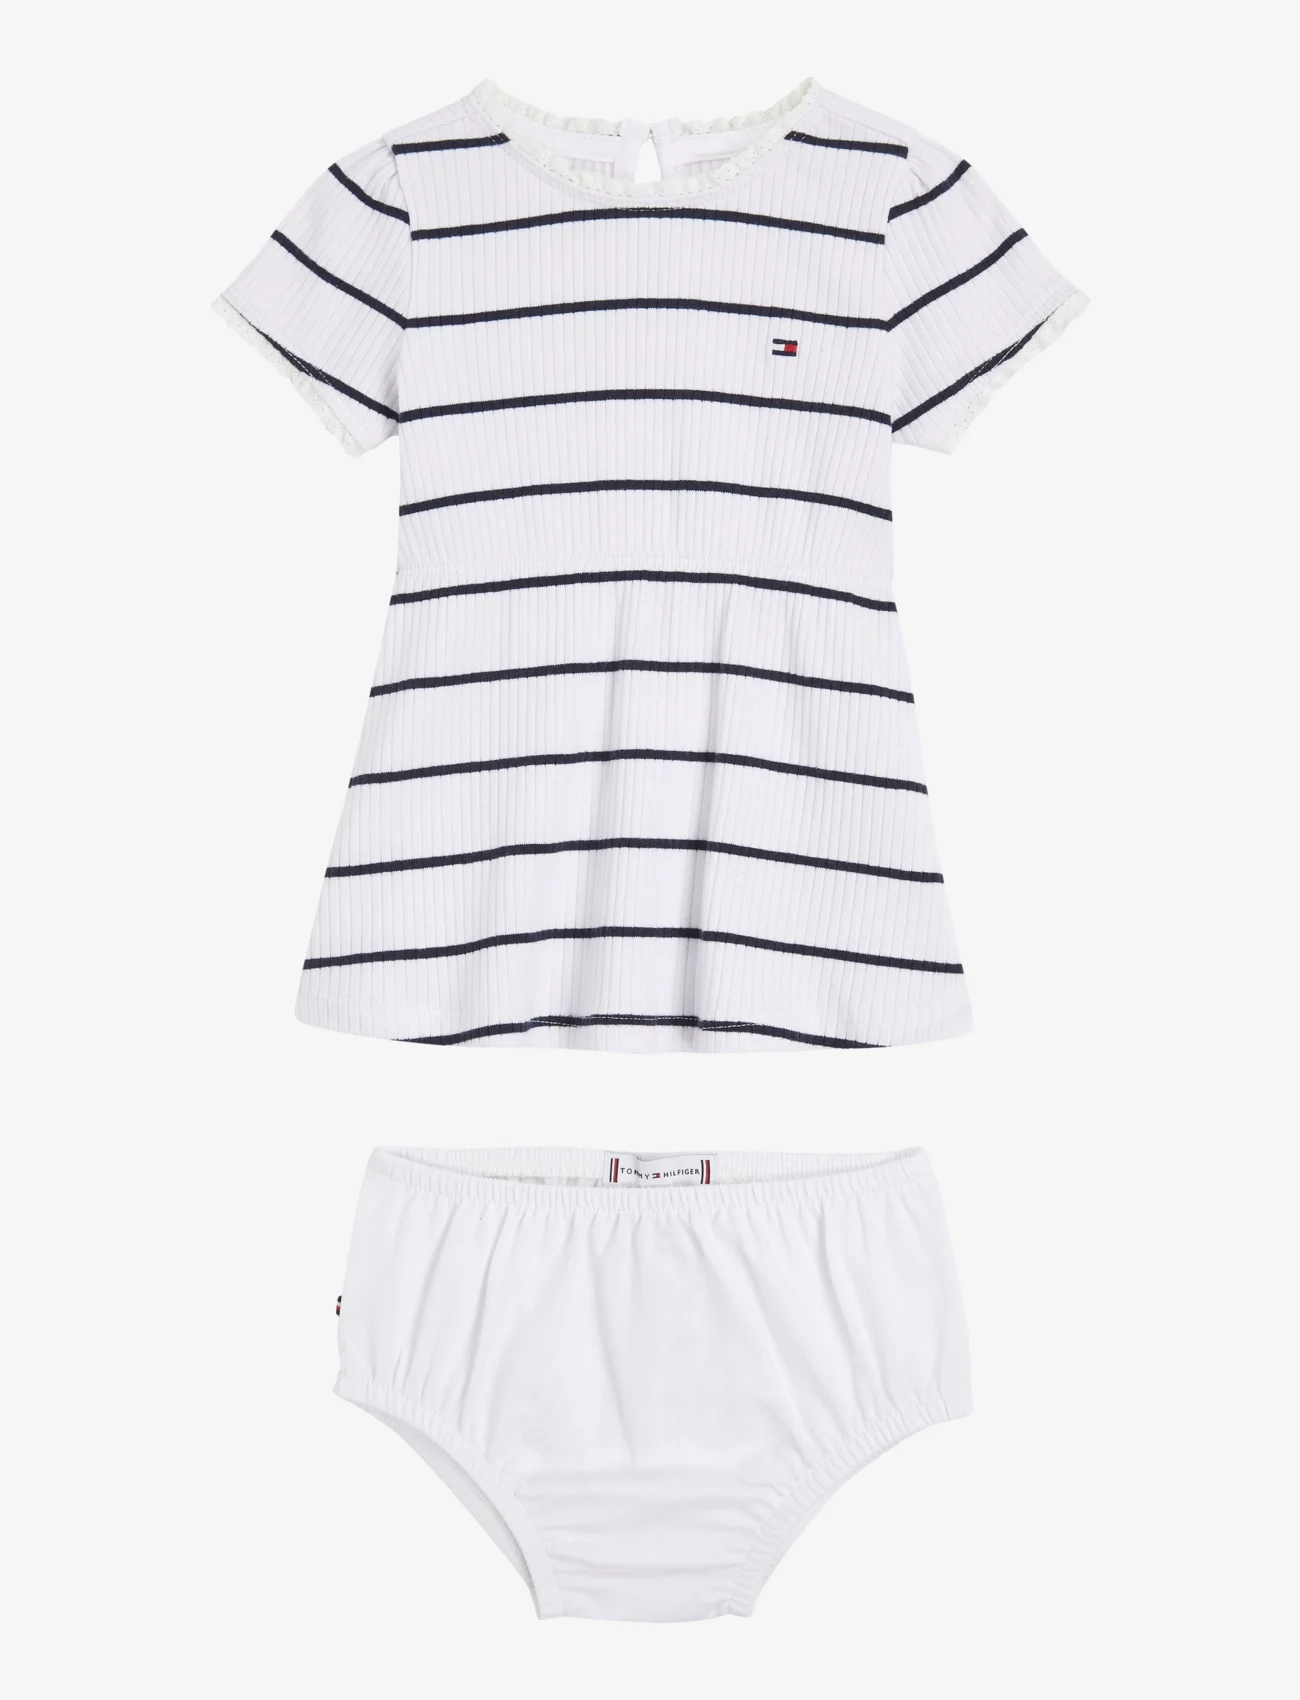 Tommy Hilfiger - BABY STRIPED RIB DRESS S/S - short-sleeved baby dresses - white / desert sky stripe - 0